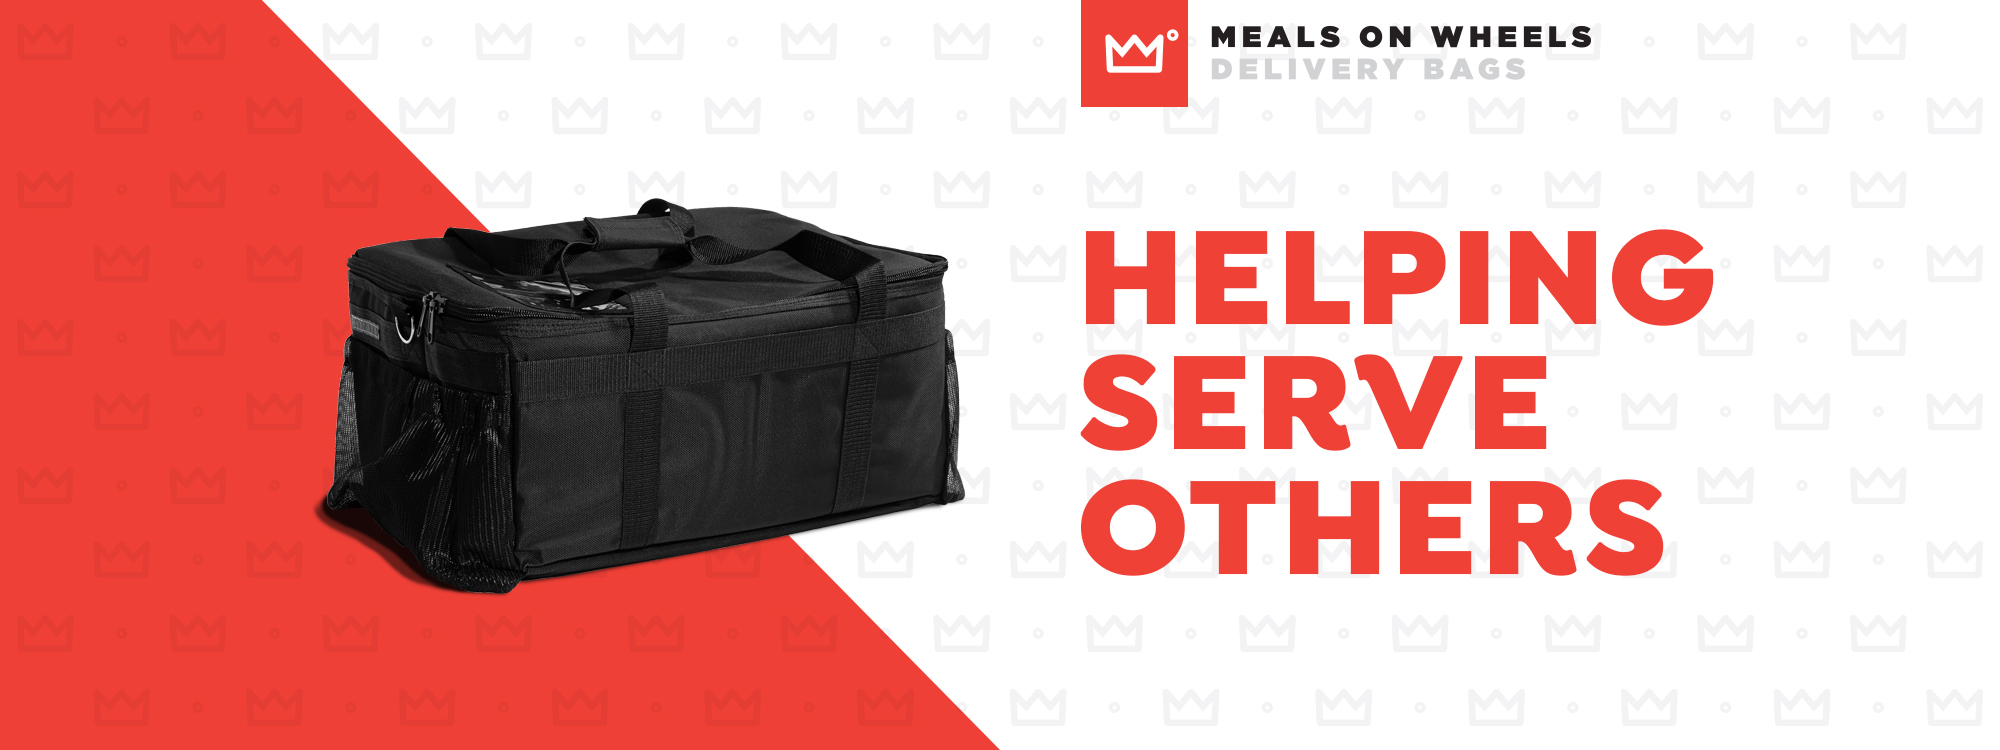 Meals on Wheels Bags - Incredible Bags